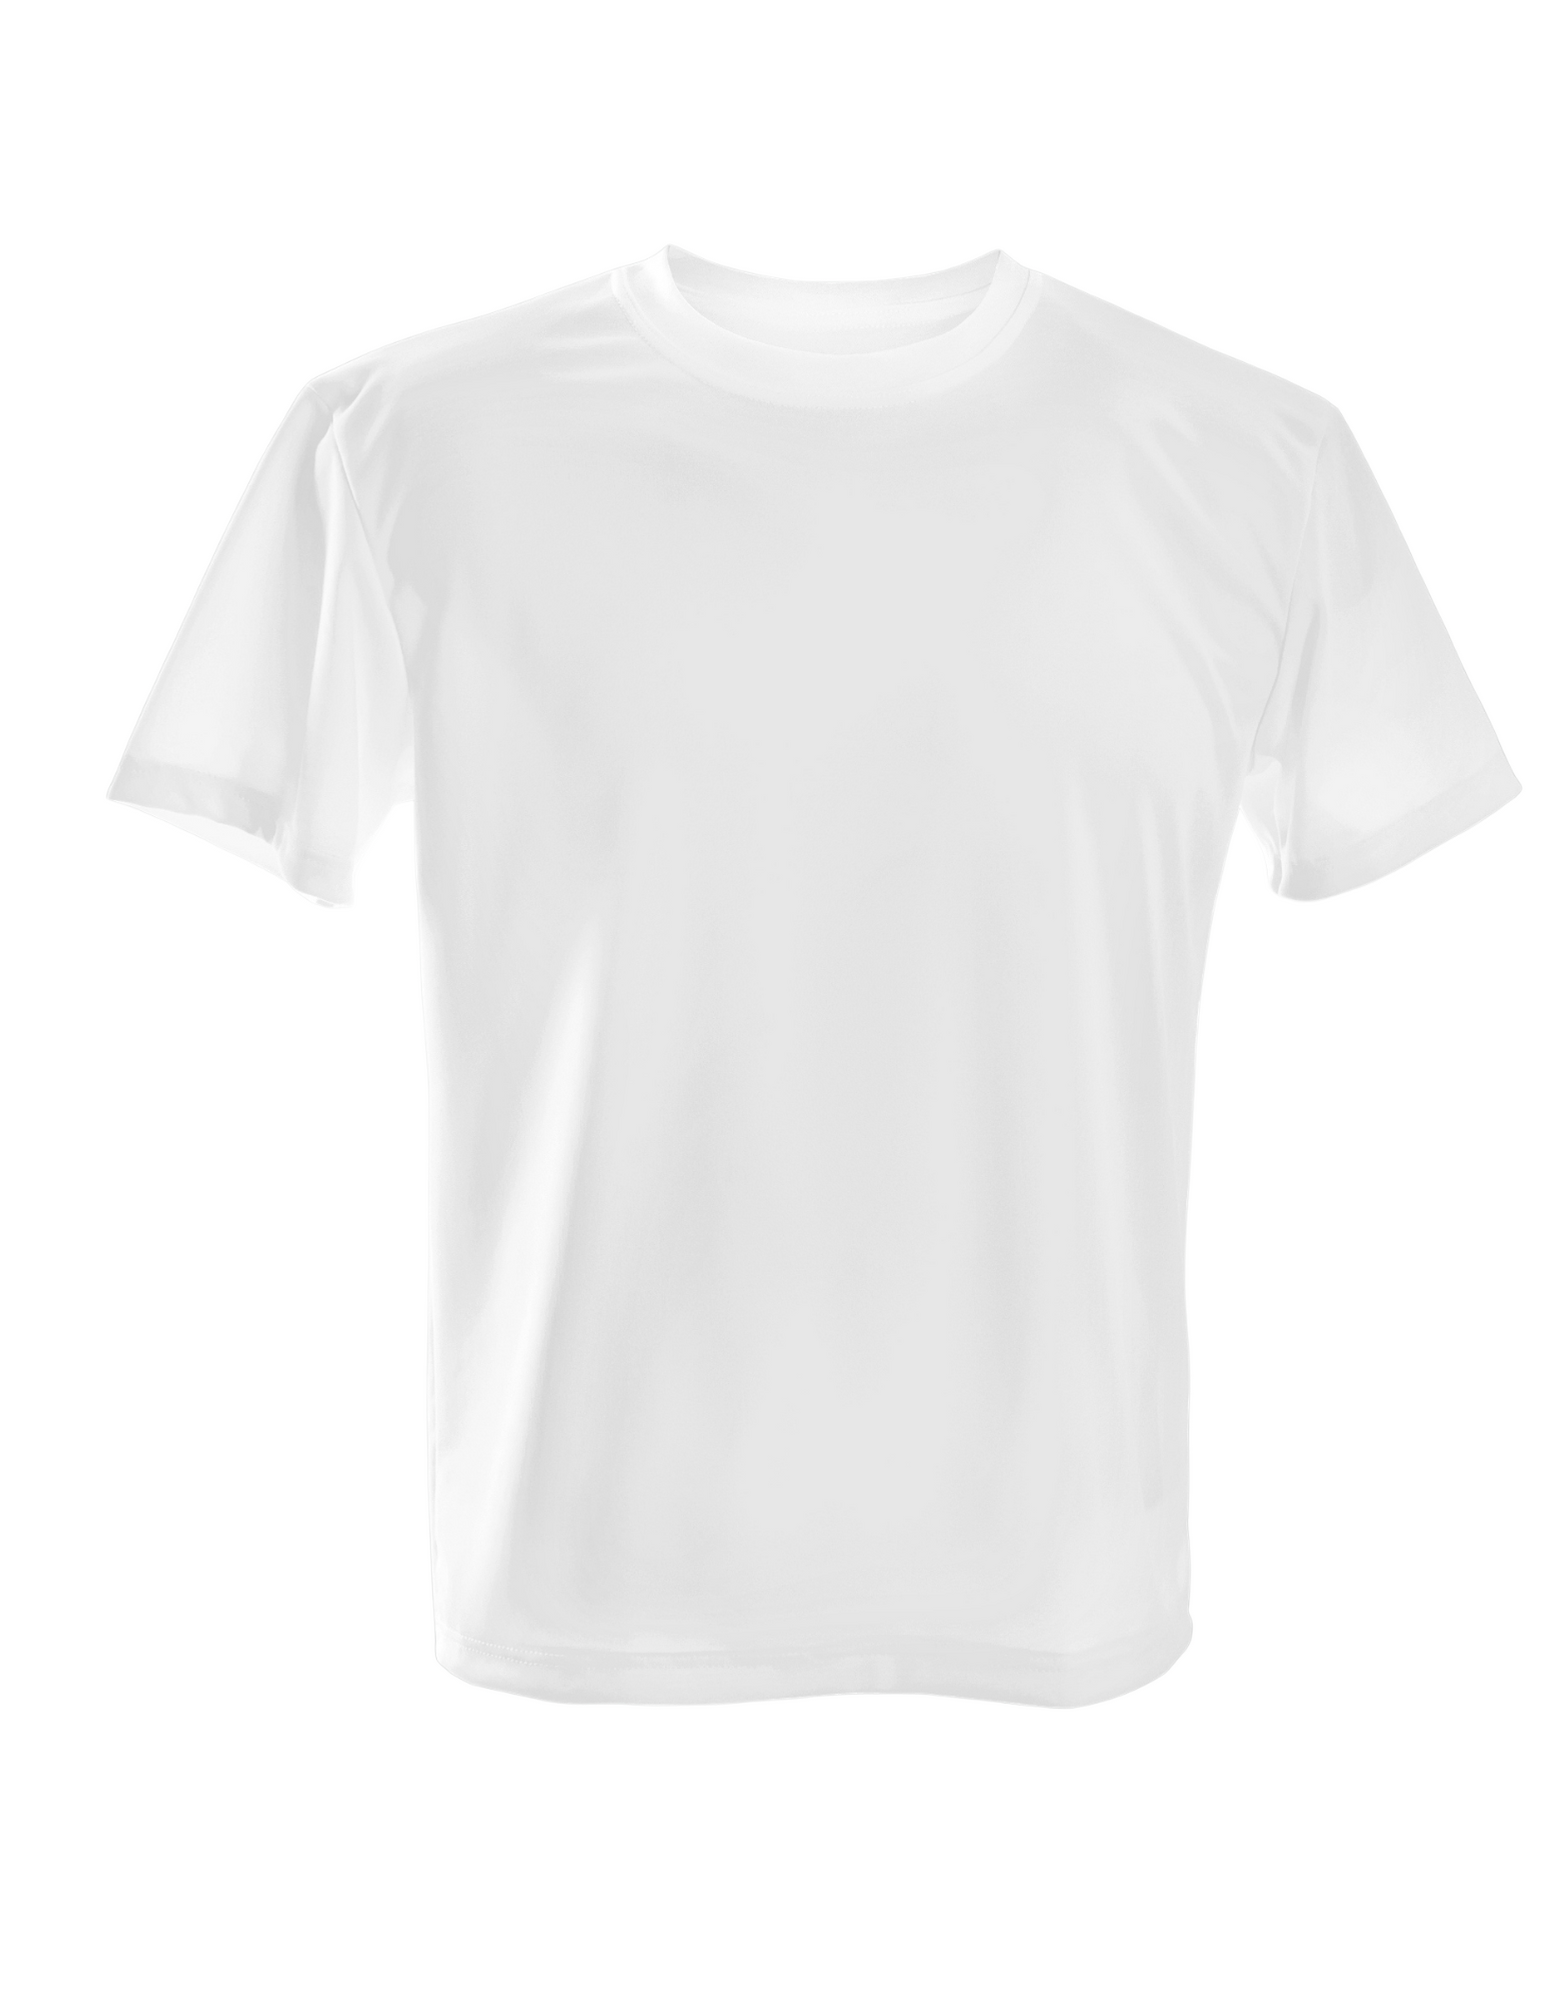 100% Polyester Adult White TShirt